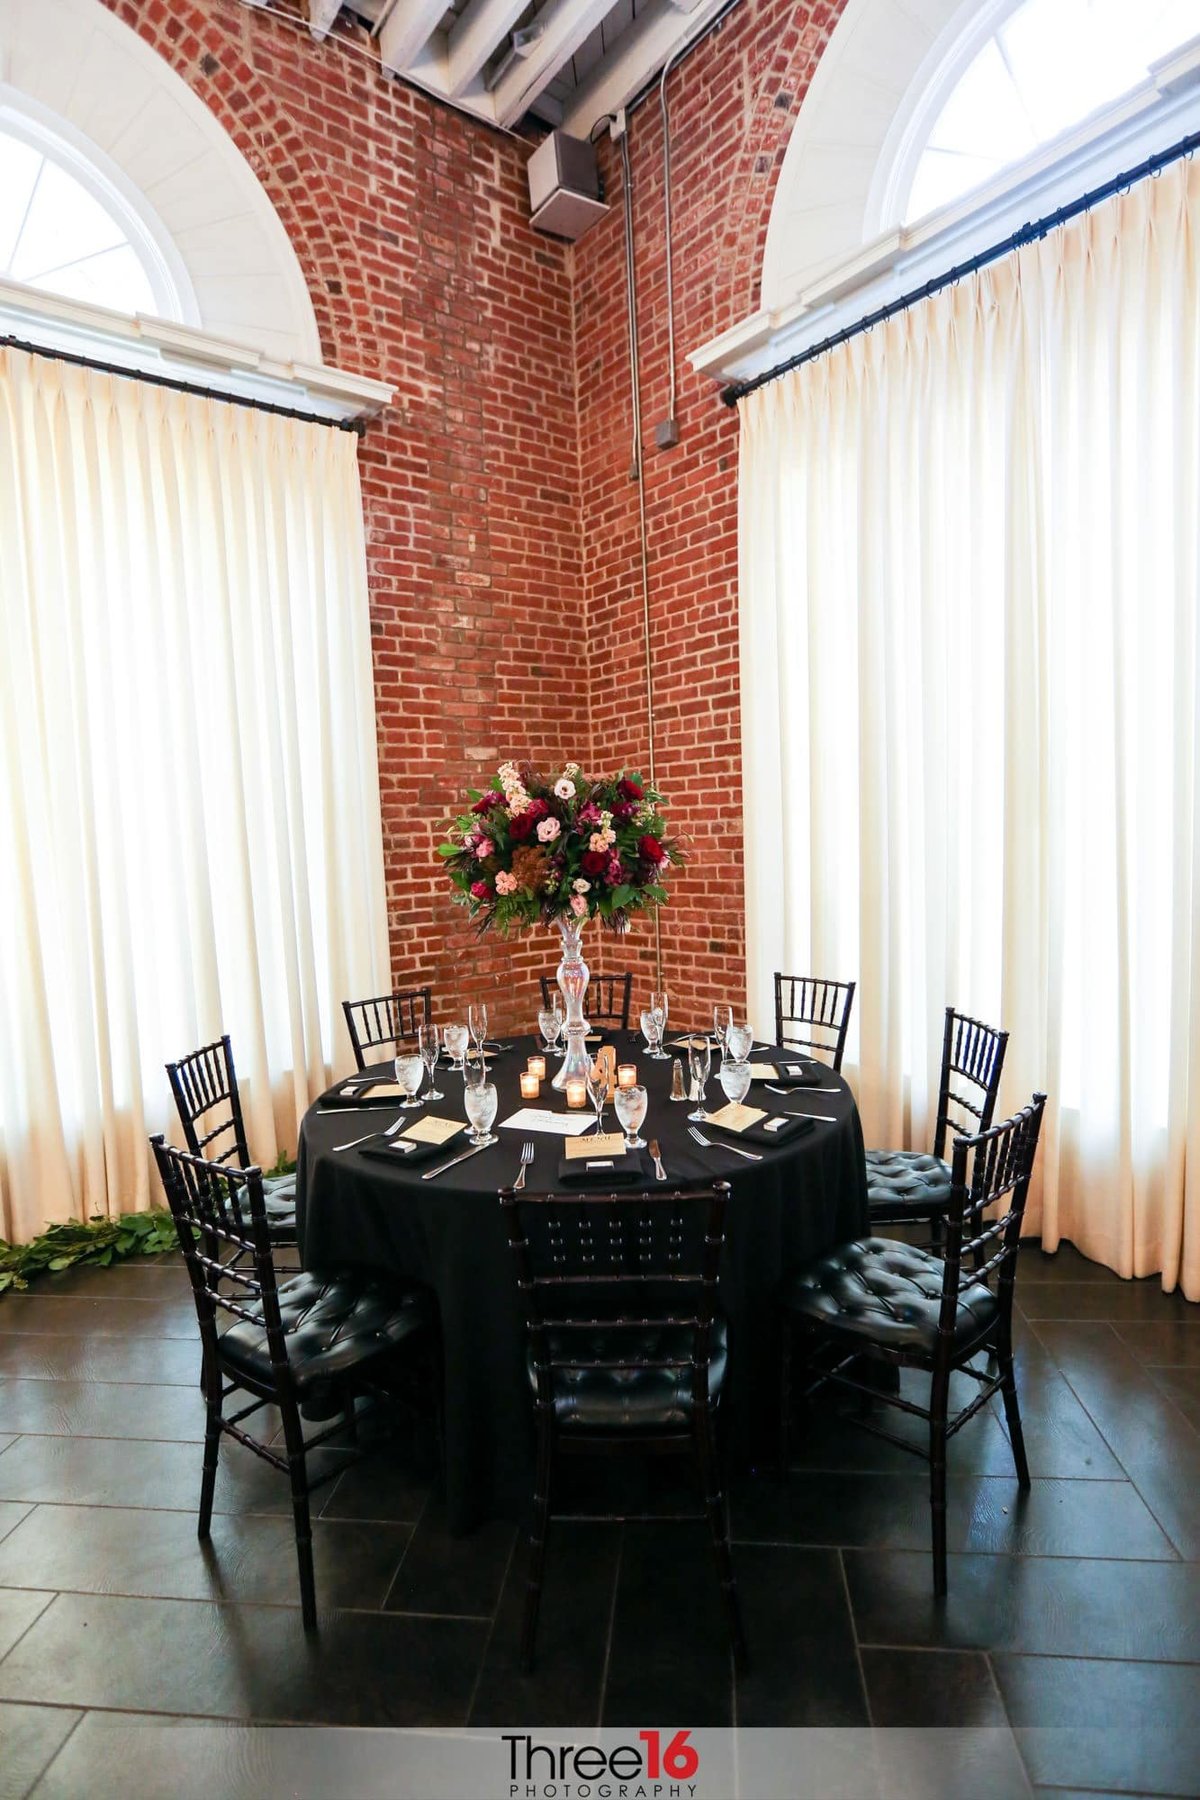 Table setup for a wedding reception